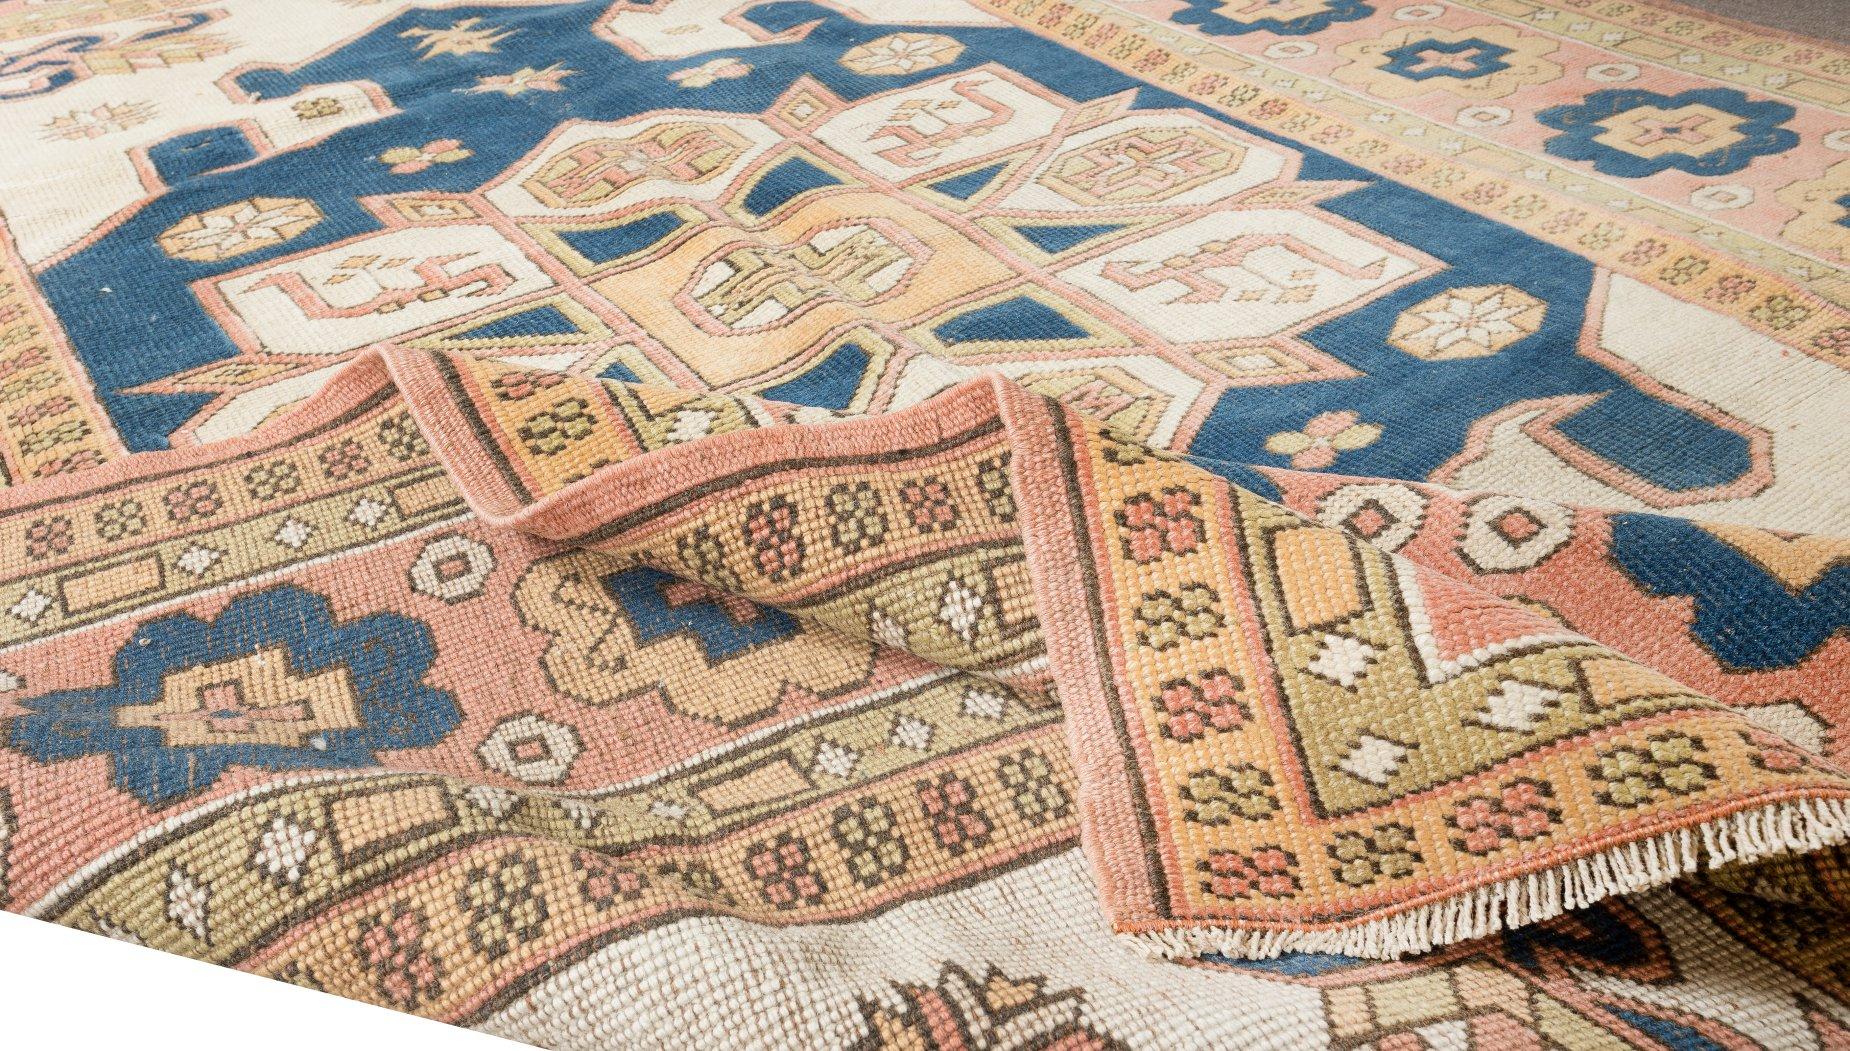 Tribal 6x8.3 Ft Vintage Handmade Geometric Anatolian Area Rug for Living Room Decor For Sale